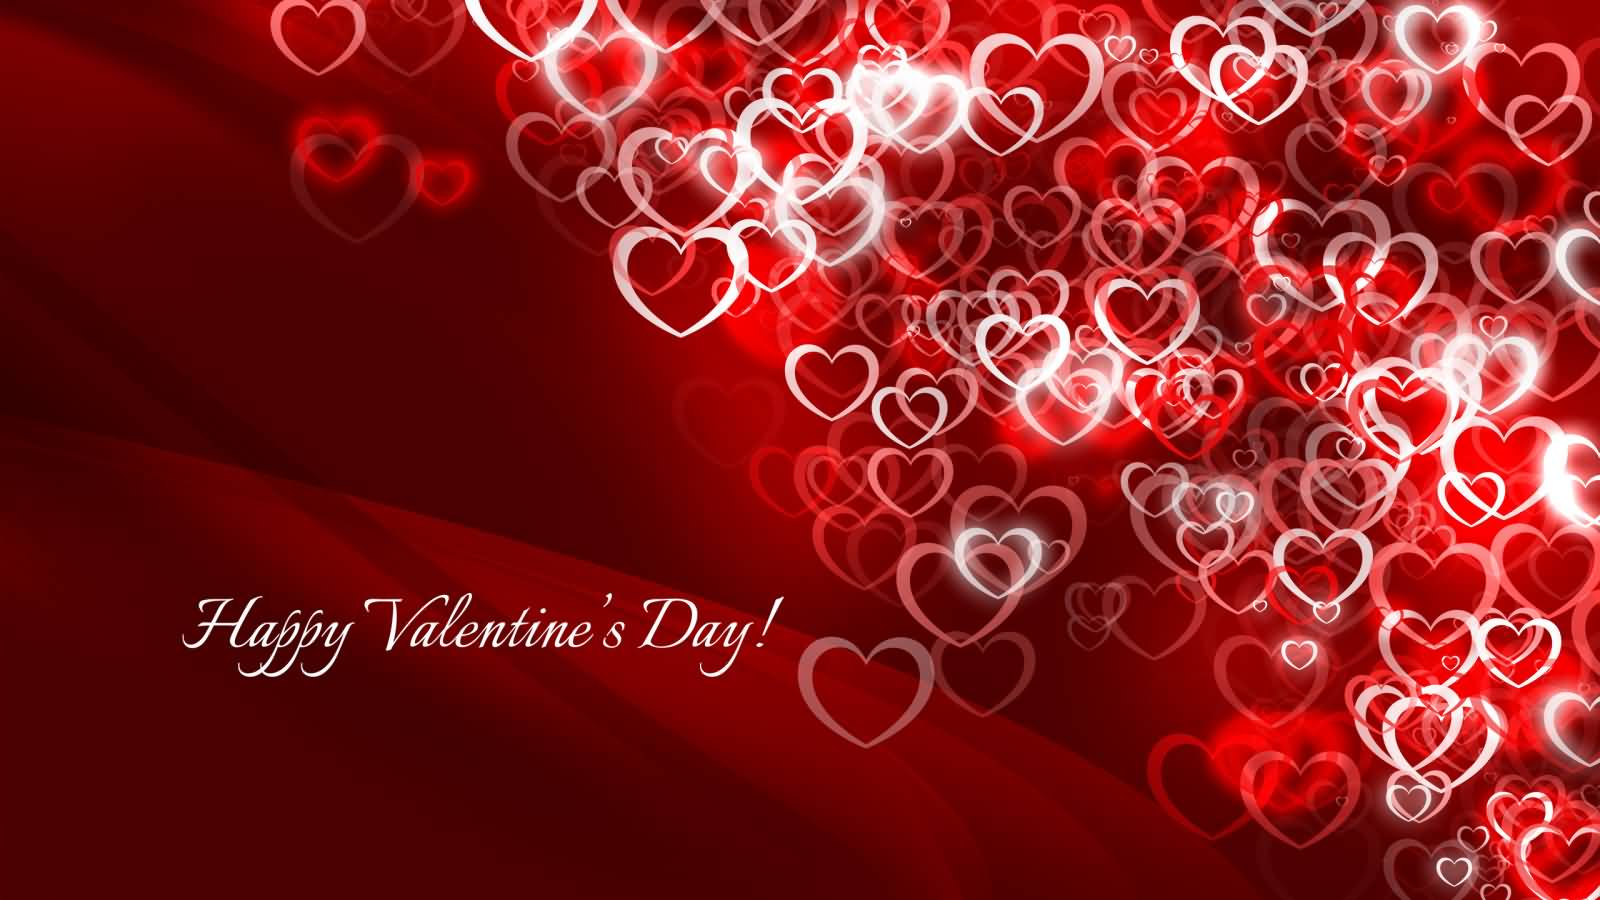 Happy Valentine’s Day Hearts Picture